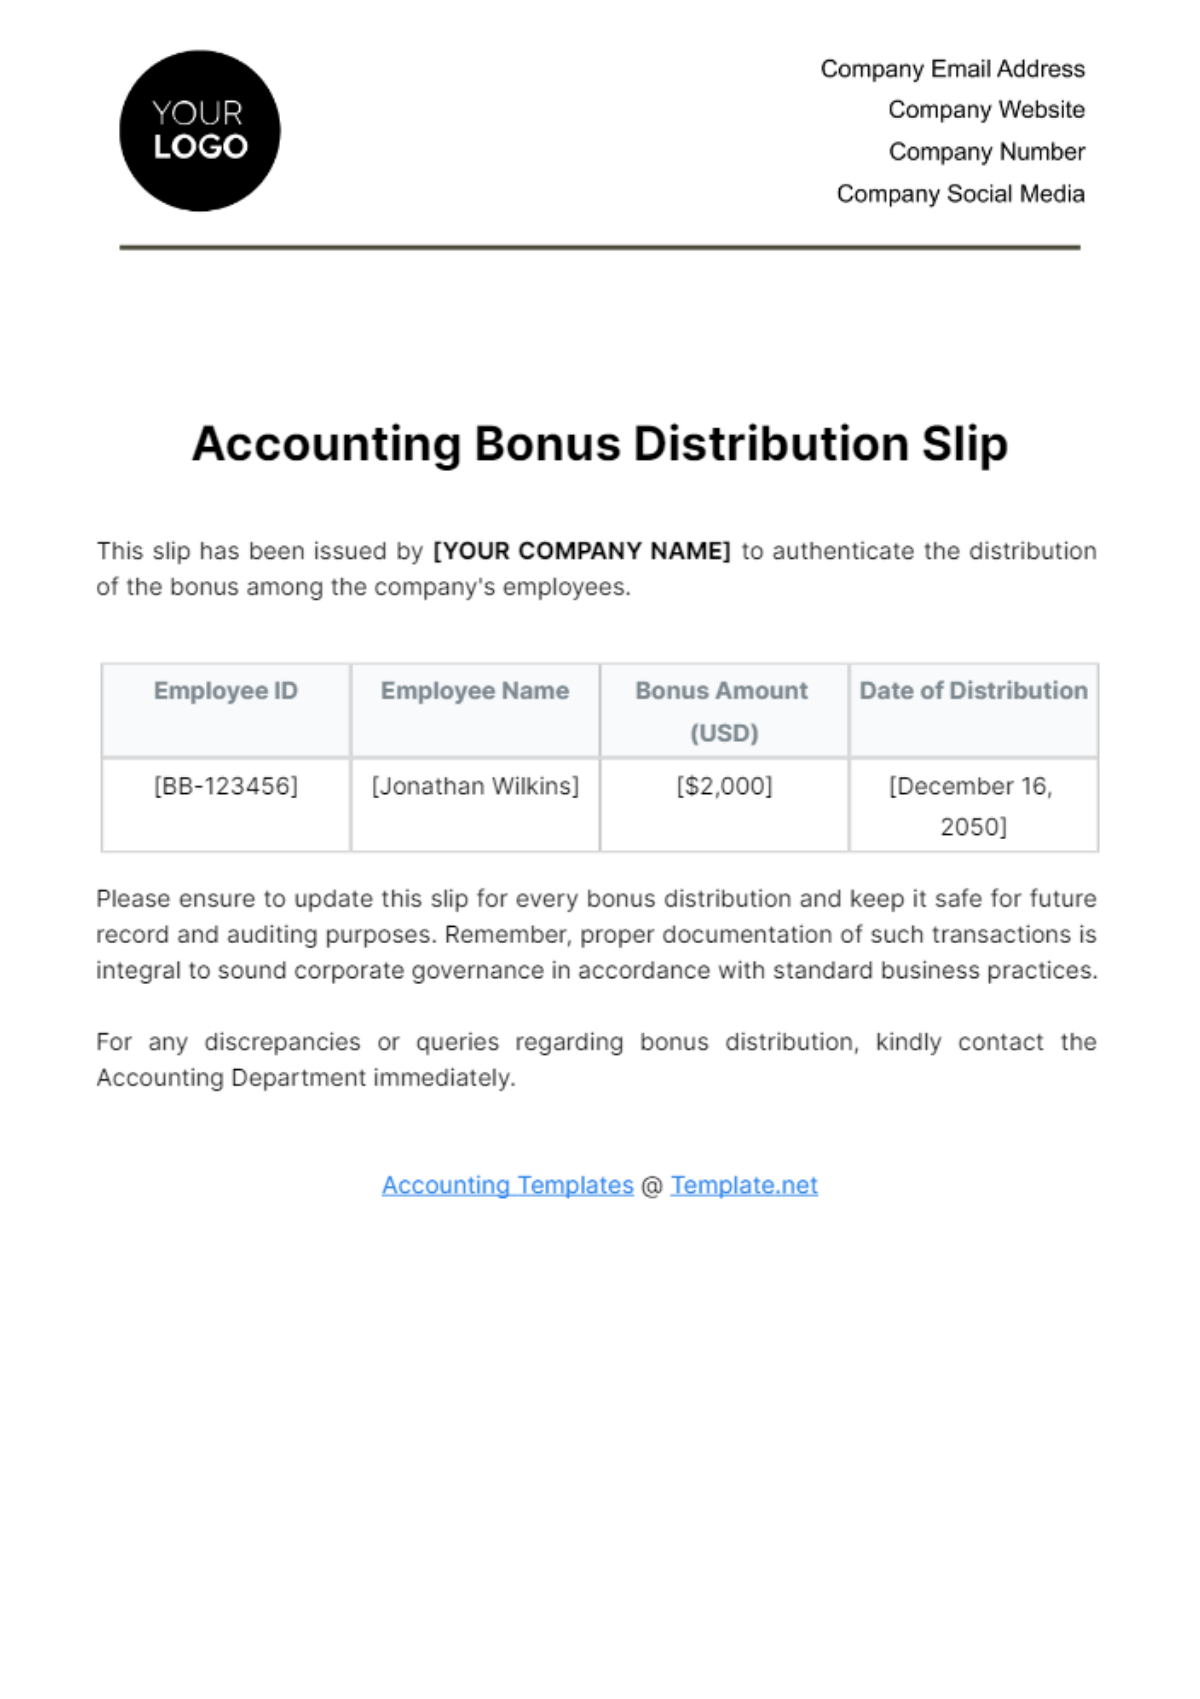 Free Accounting Bonus Distribution Slip Template